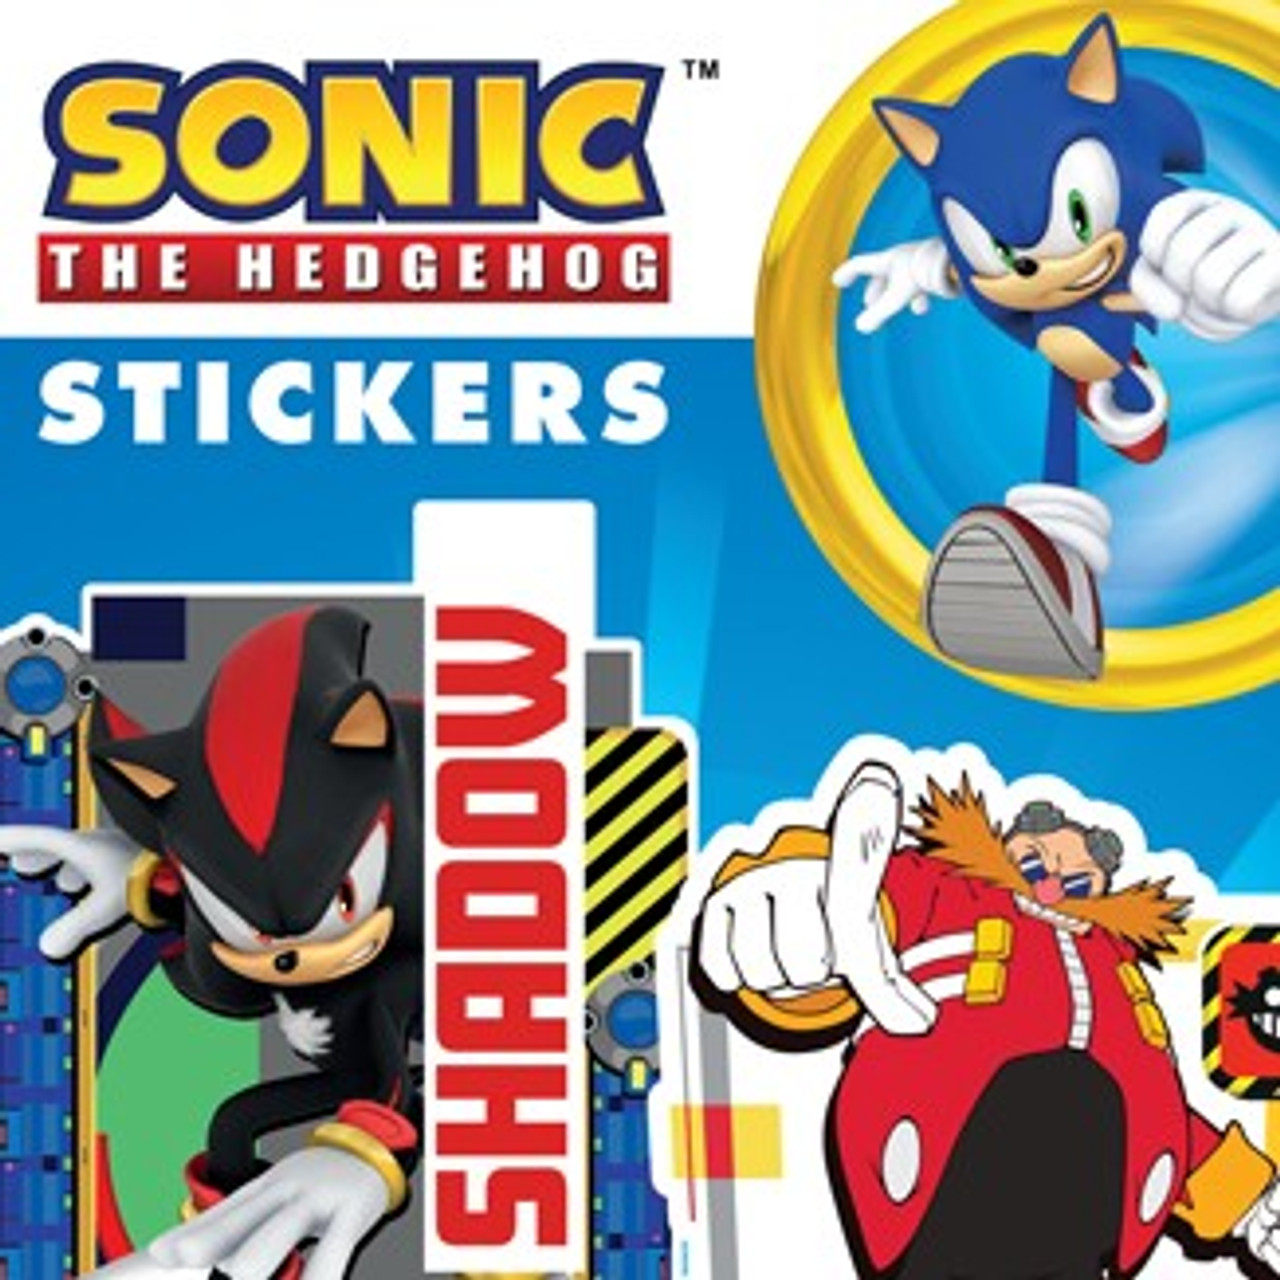 Shadow x amy x sonic - Sonic The Hegdehog - Sticker